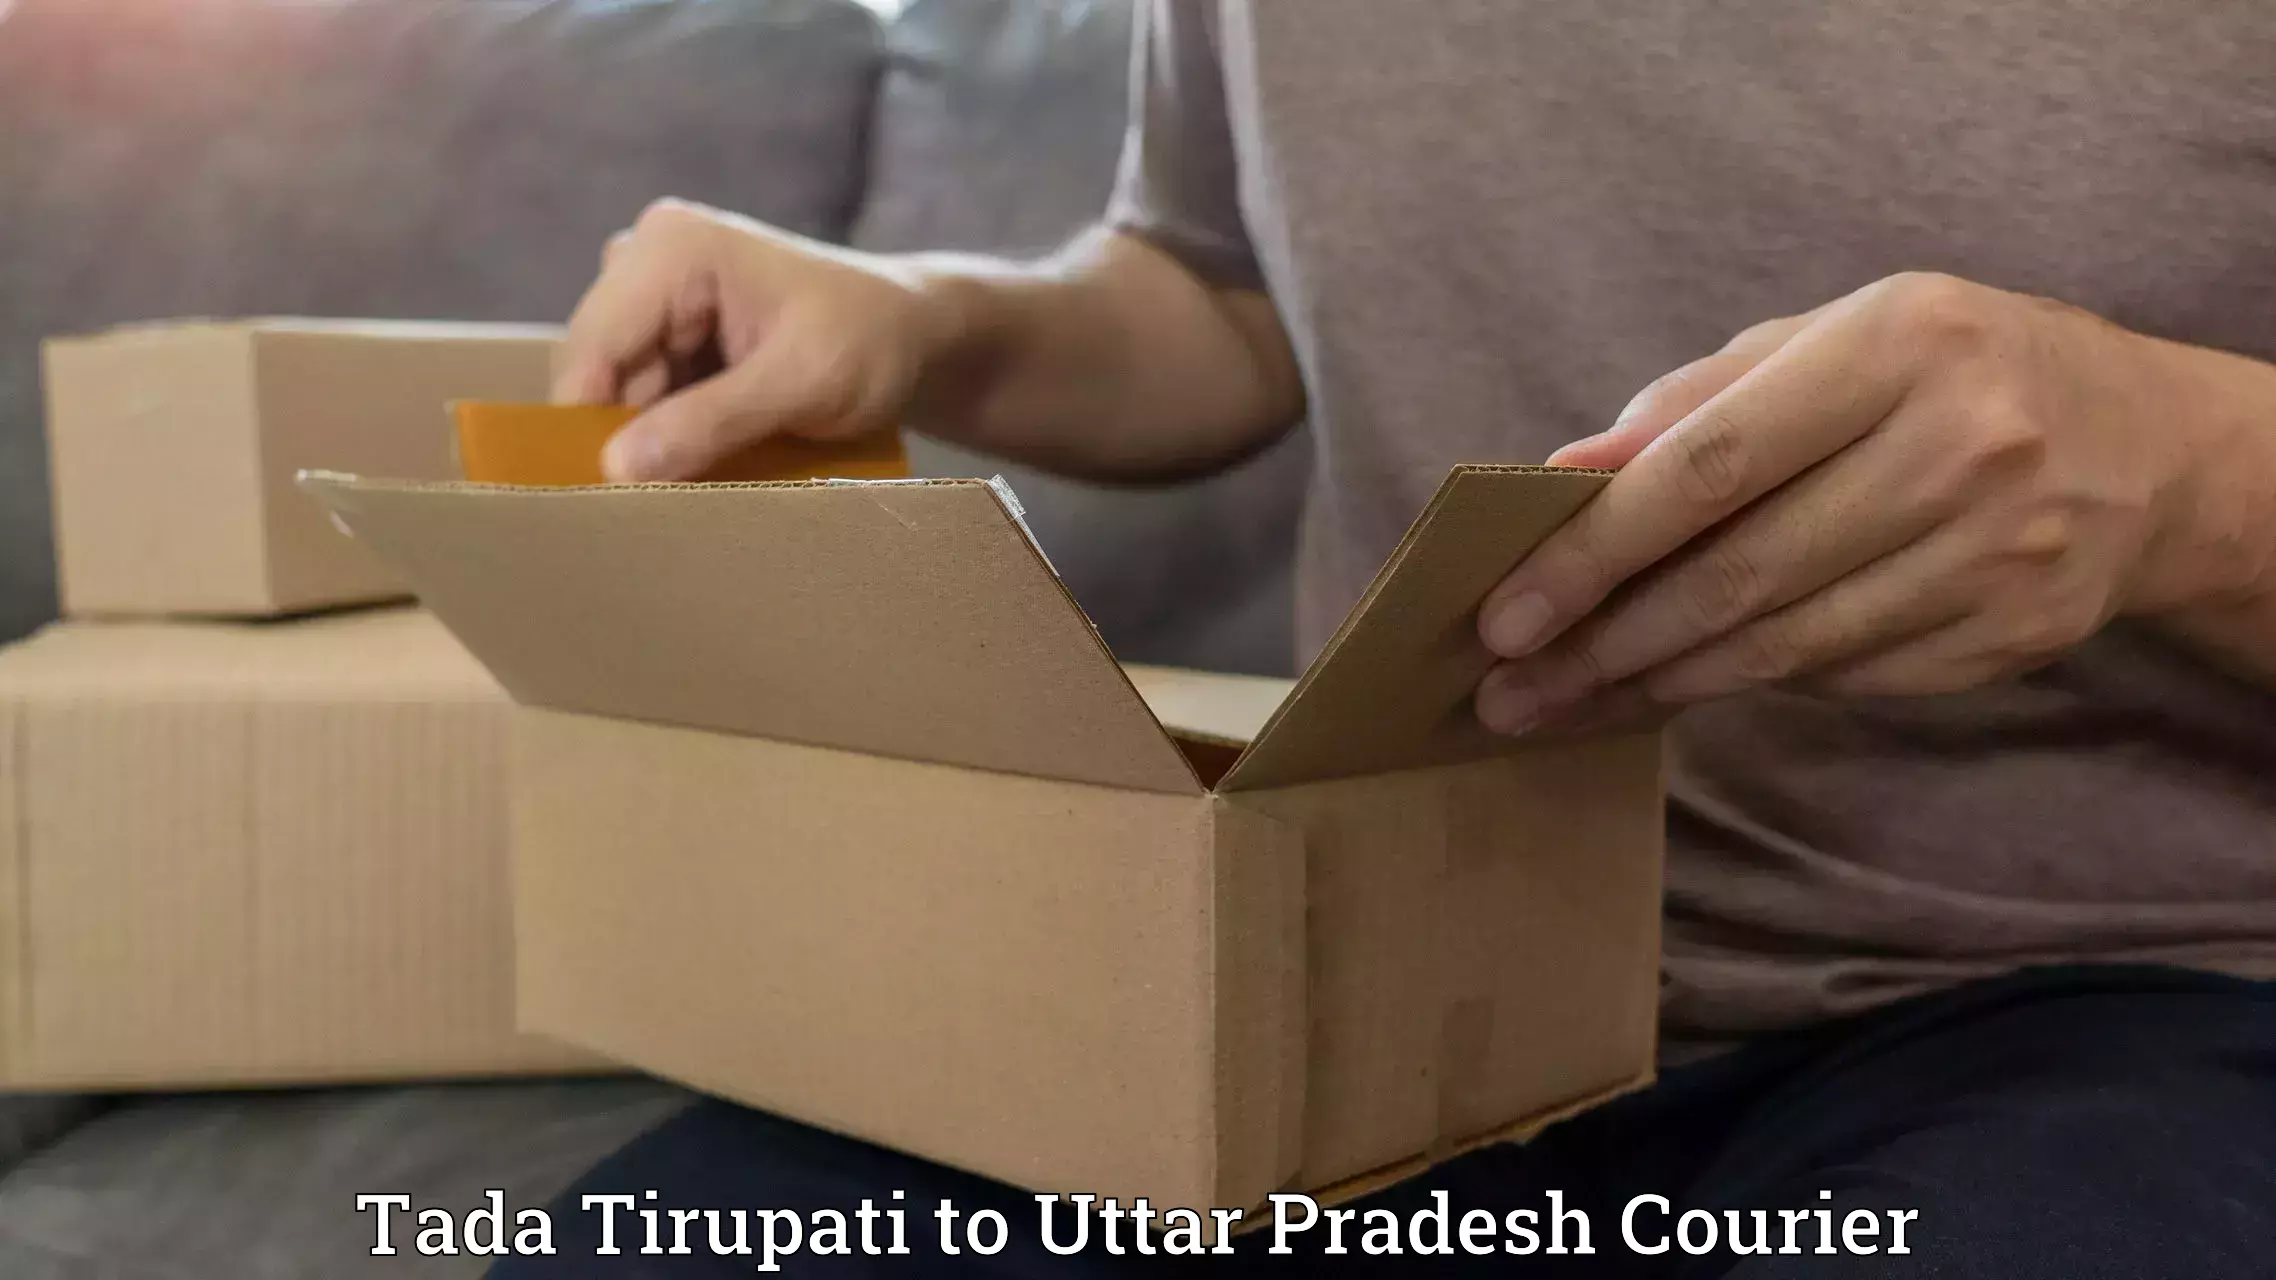 Global courier networks Tada Tirupati to Siyana